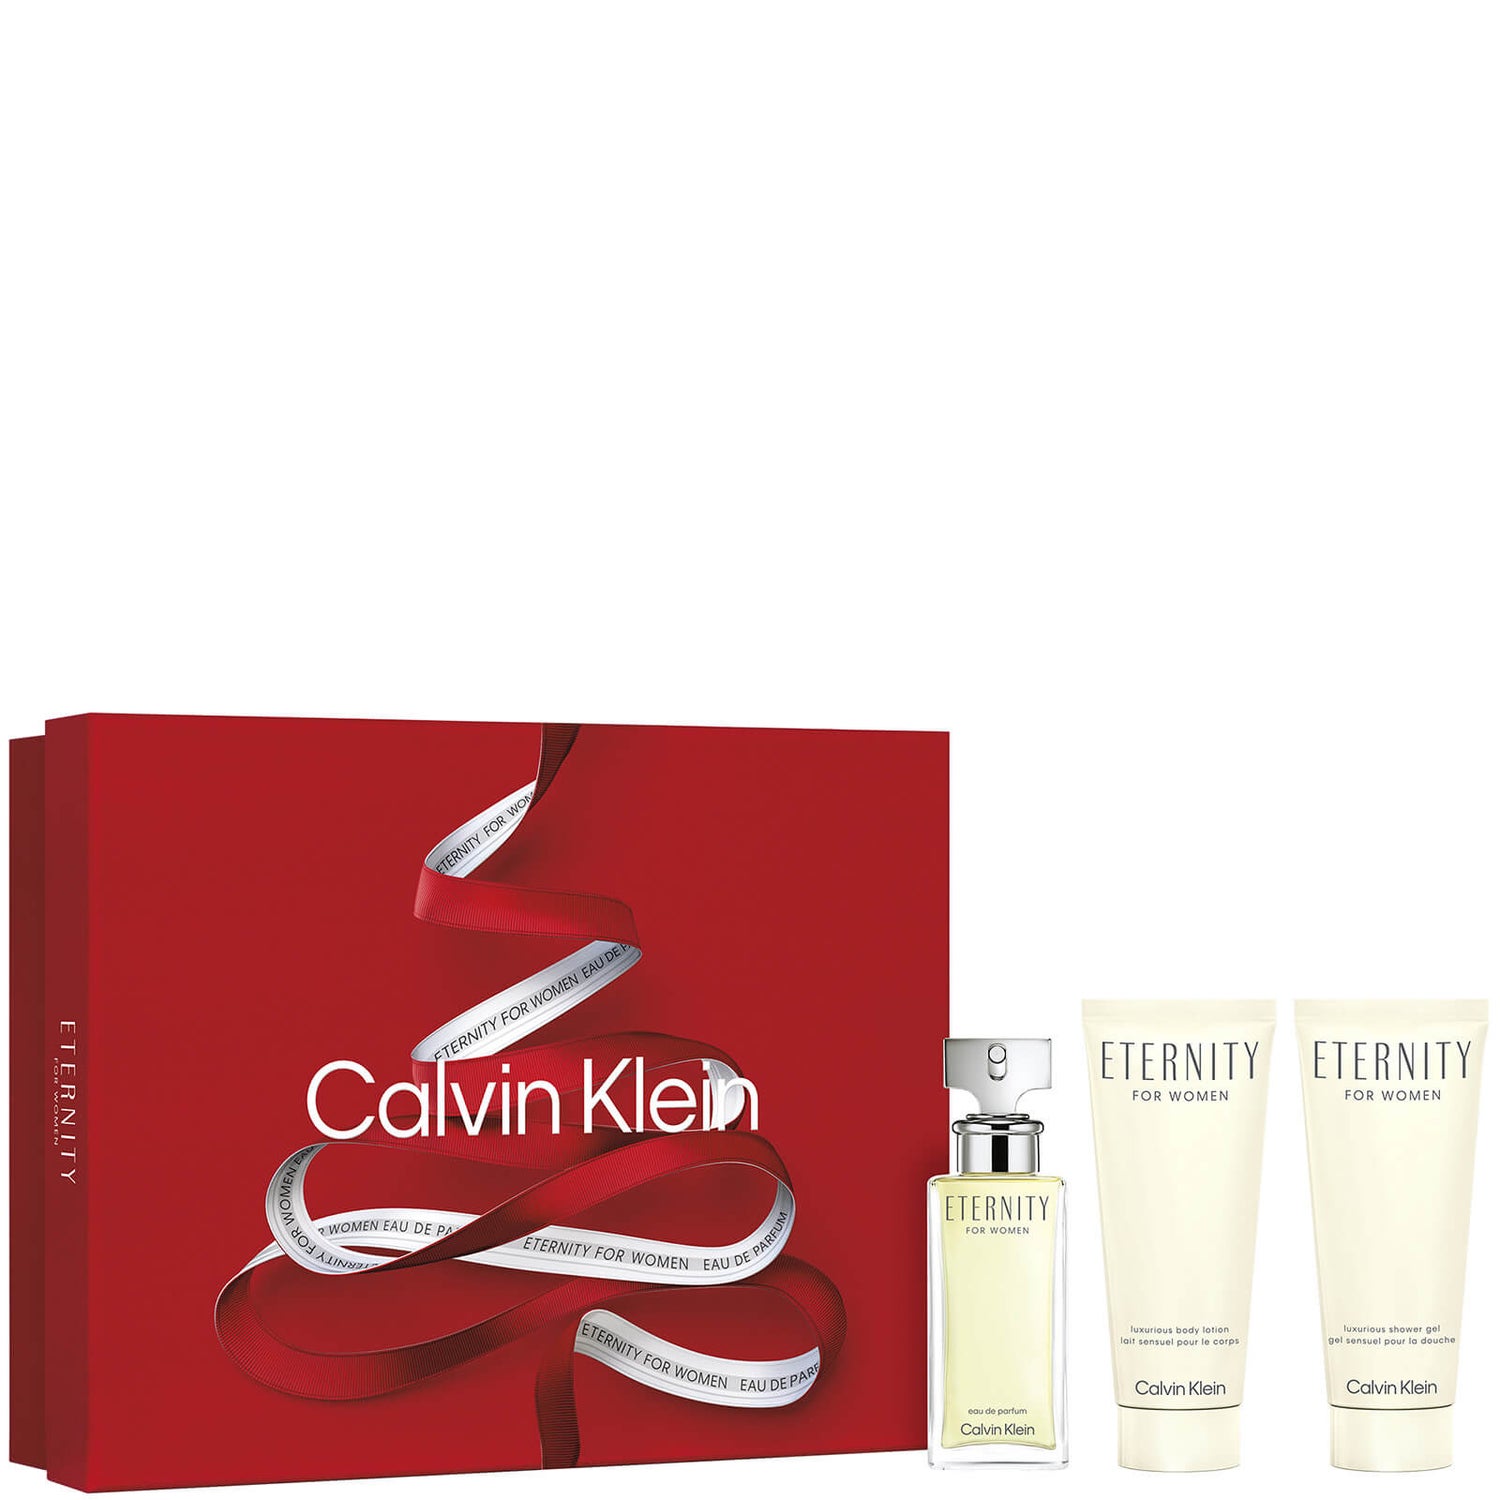 Calvin Klein Eternity for Women Eau de Parfum 50ml Gift Set (Worth £63.00)